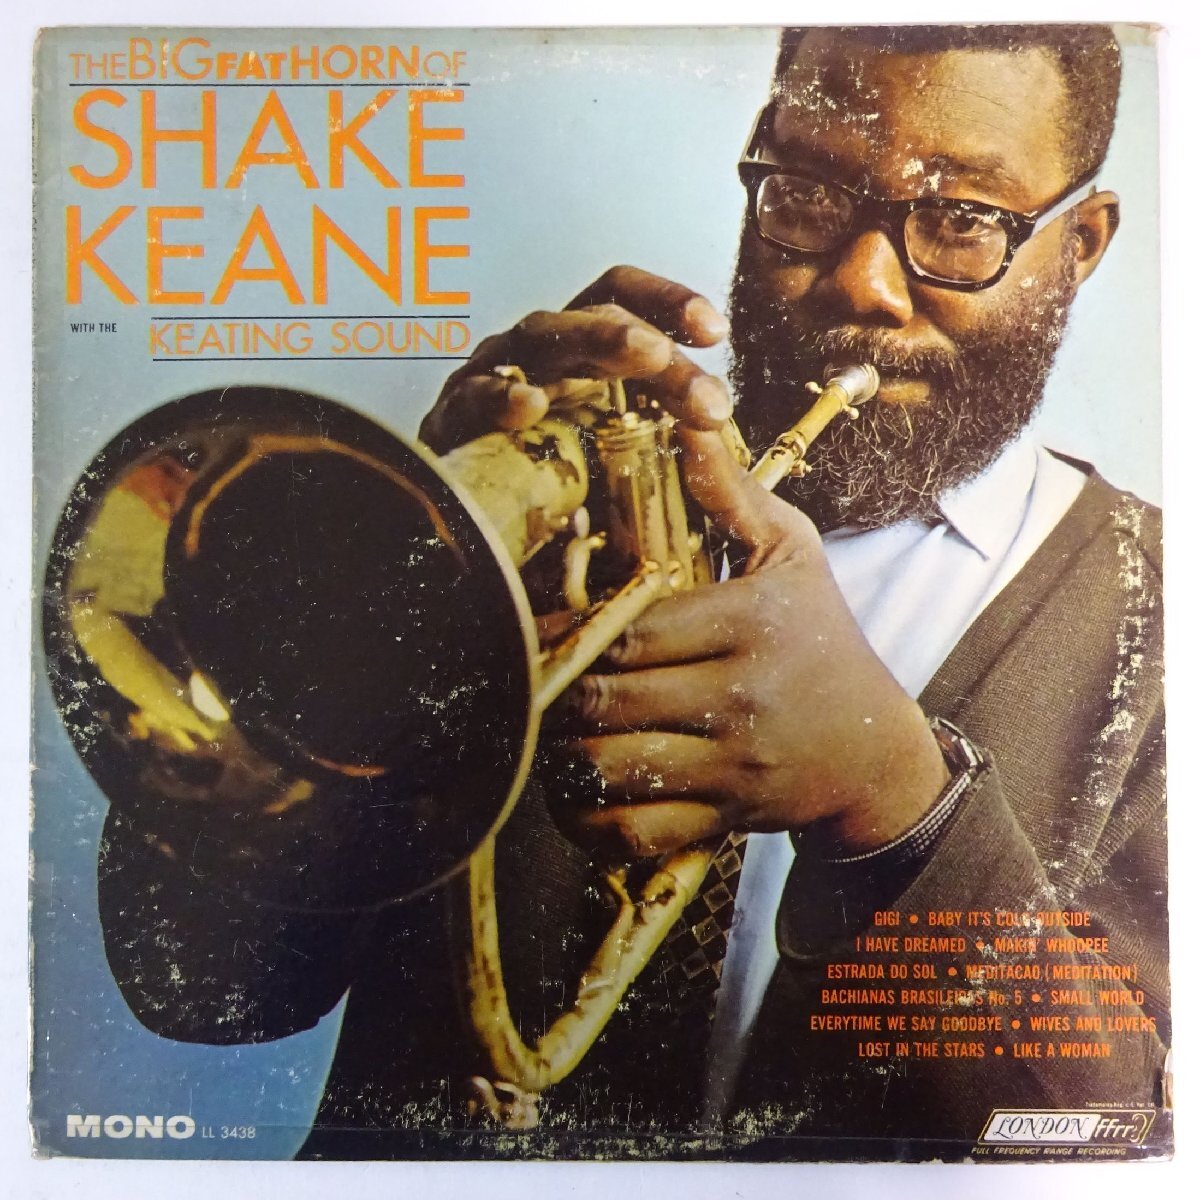 14031316;【USオリジナル/プロモ/白ラベル/MONO】Shake Keane With The Keating Sound / The Big Fat Horn Of Shake Keaneの画像1